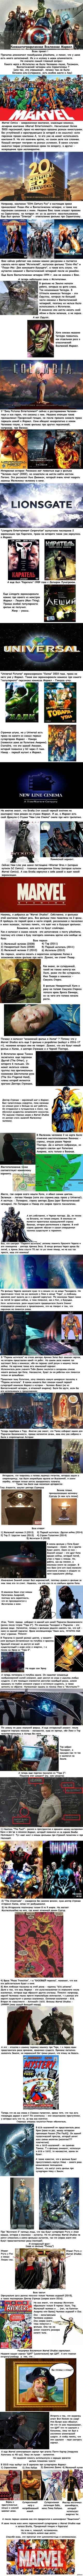   Marvel ( 2).       <a href="http://pikabu.ru/story/analiz_kinovselennoy_marvel_1676206">http://pikabu.ru/story/_1676206</a>